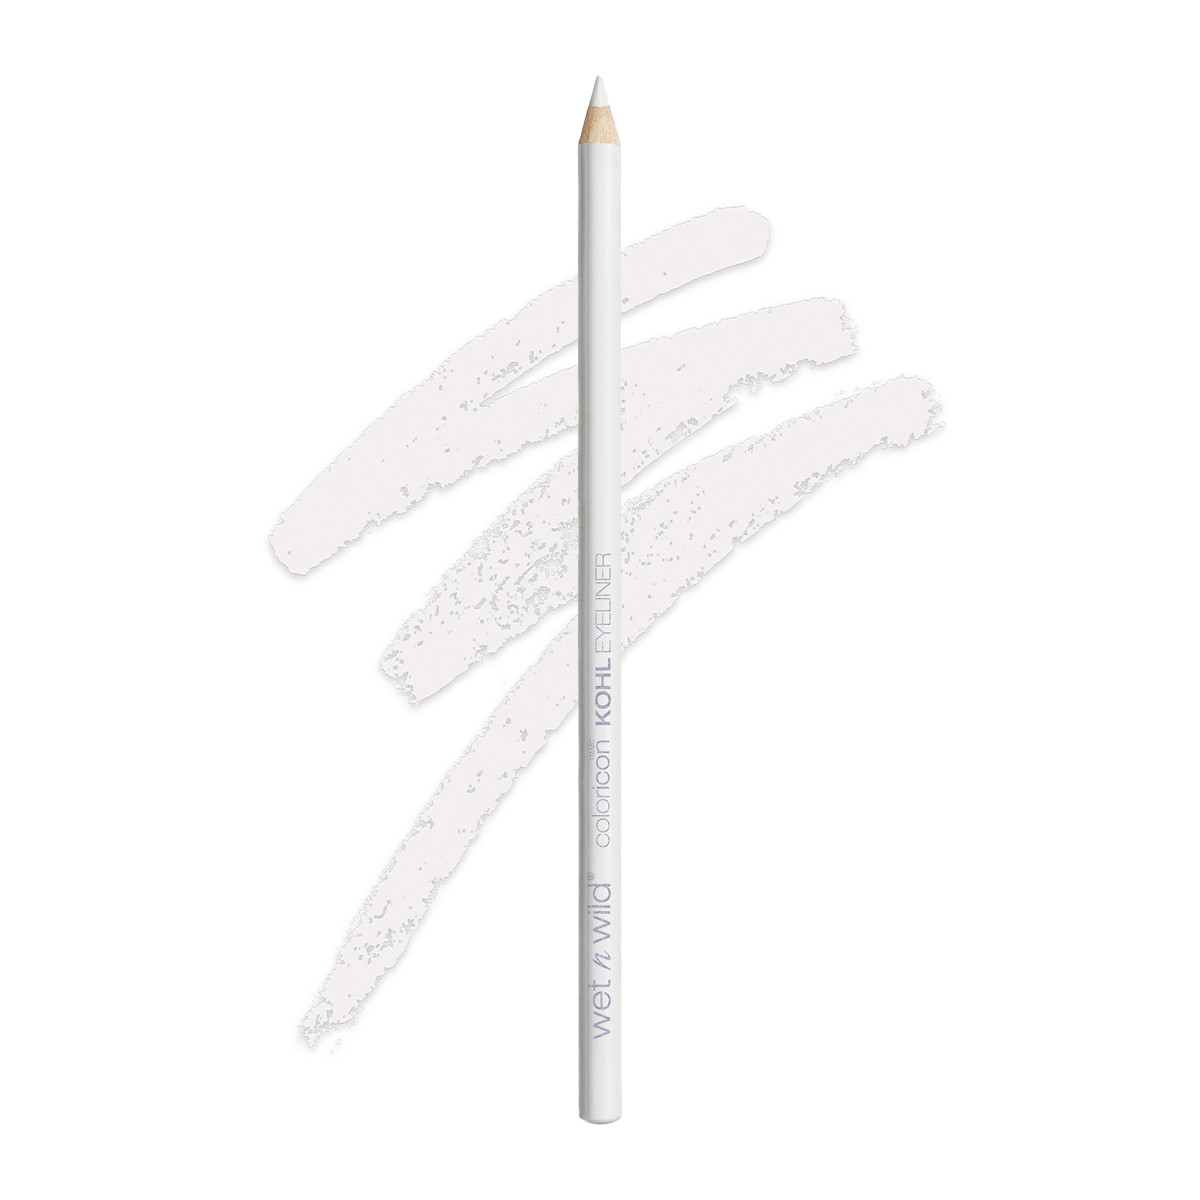 Liquid White Colored Pencil vs Titanium White & Touch Up Texture